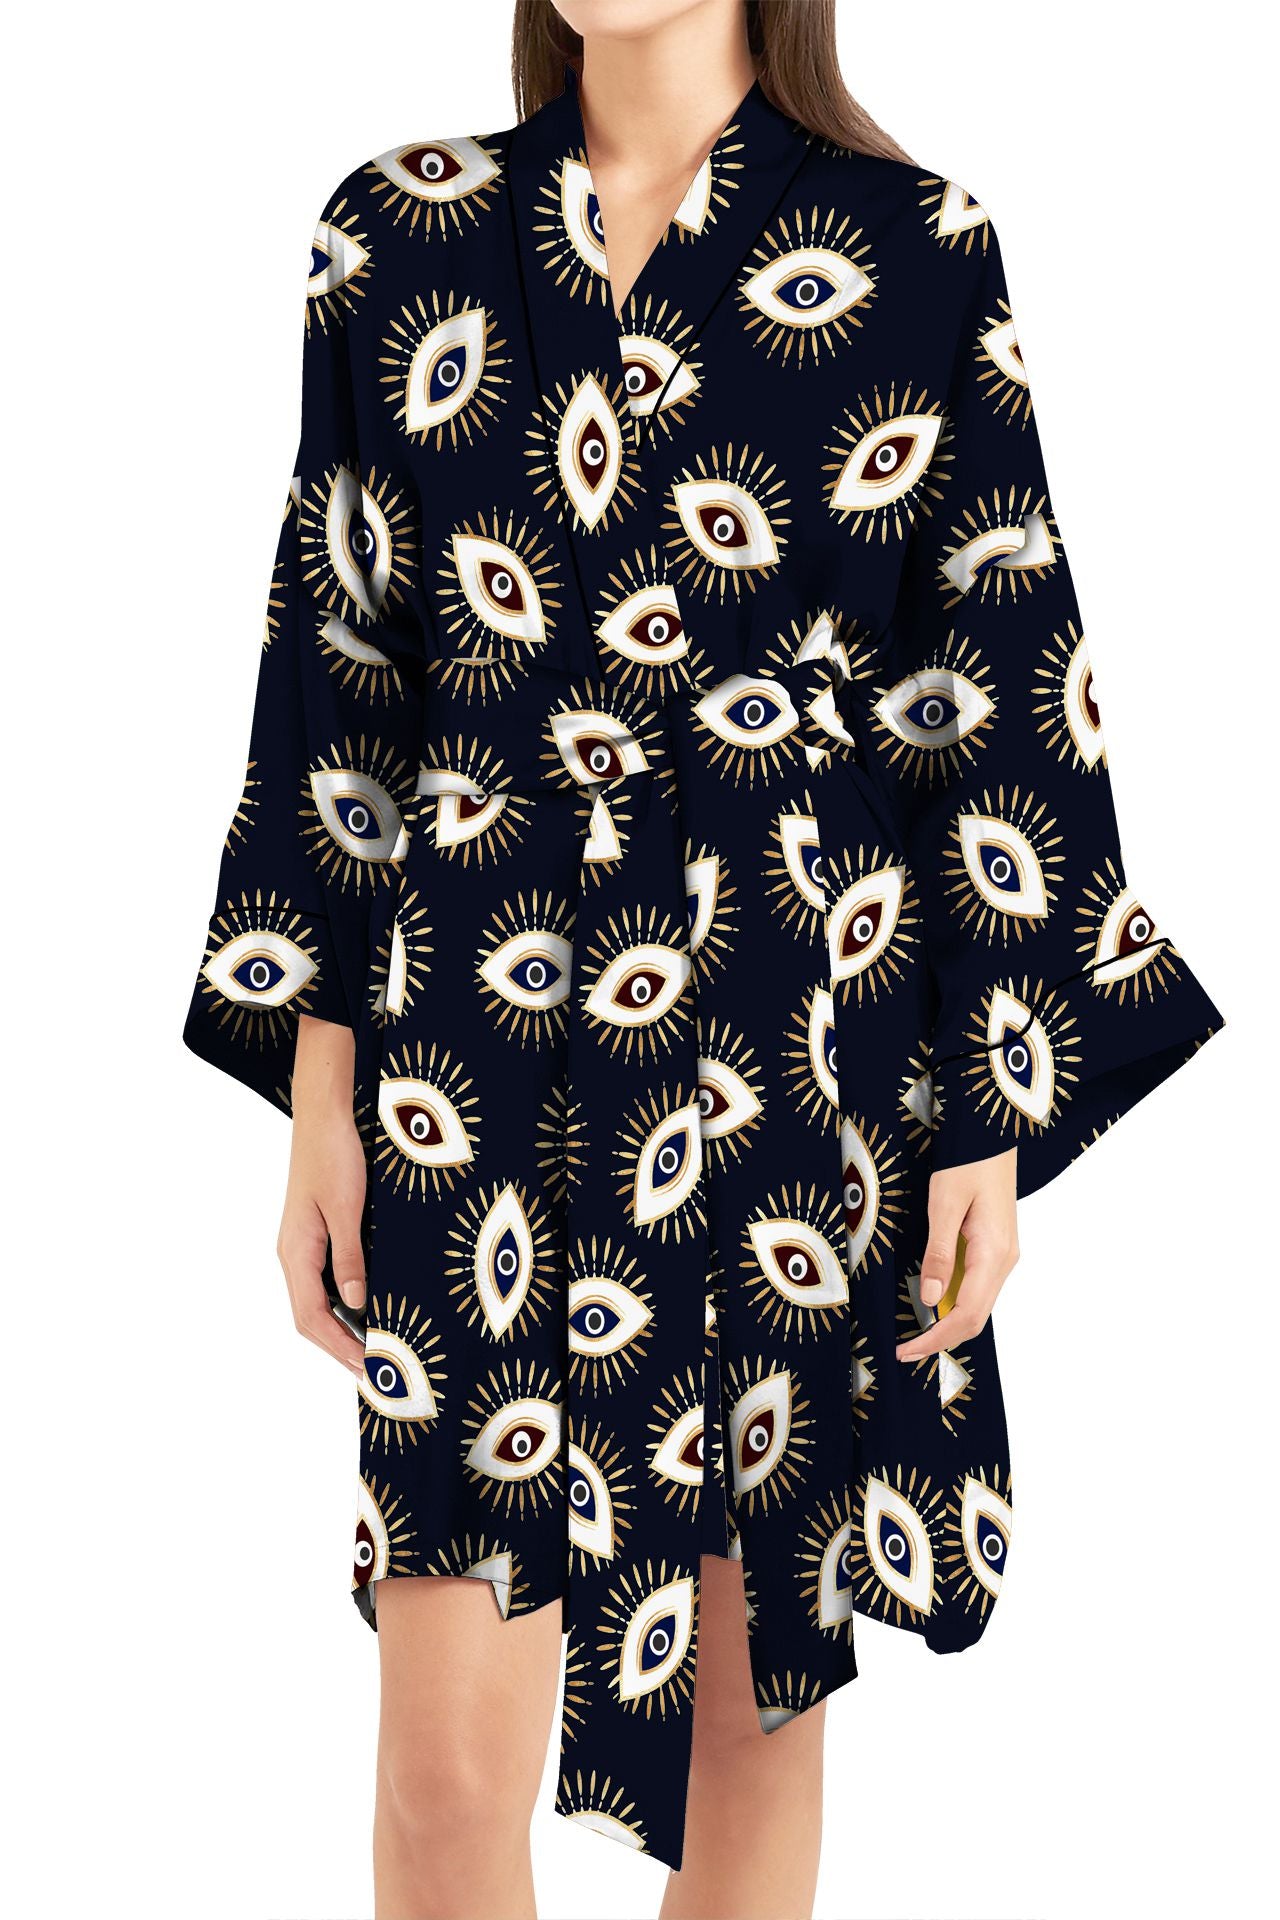 "printed kimono" "Kyle X Shahida" "women's short kimono" "short silk robes for women"